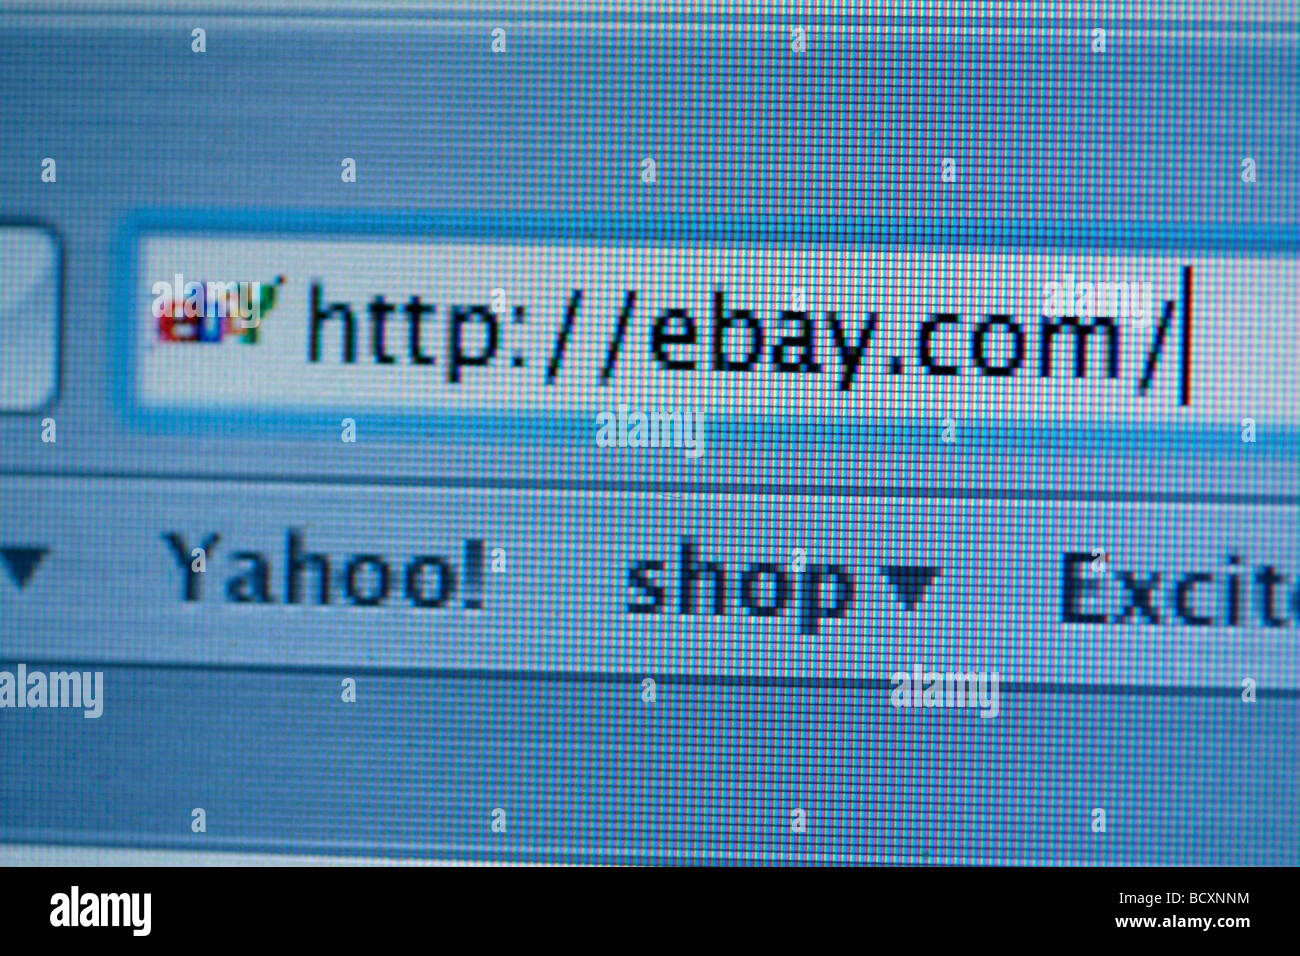 web site, ebay.com Stock Photo